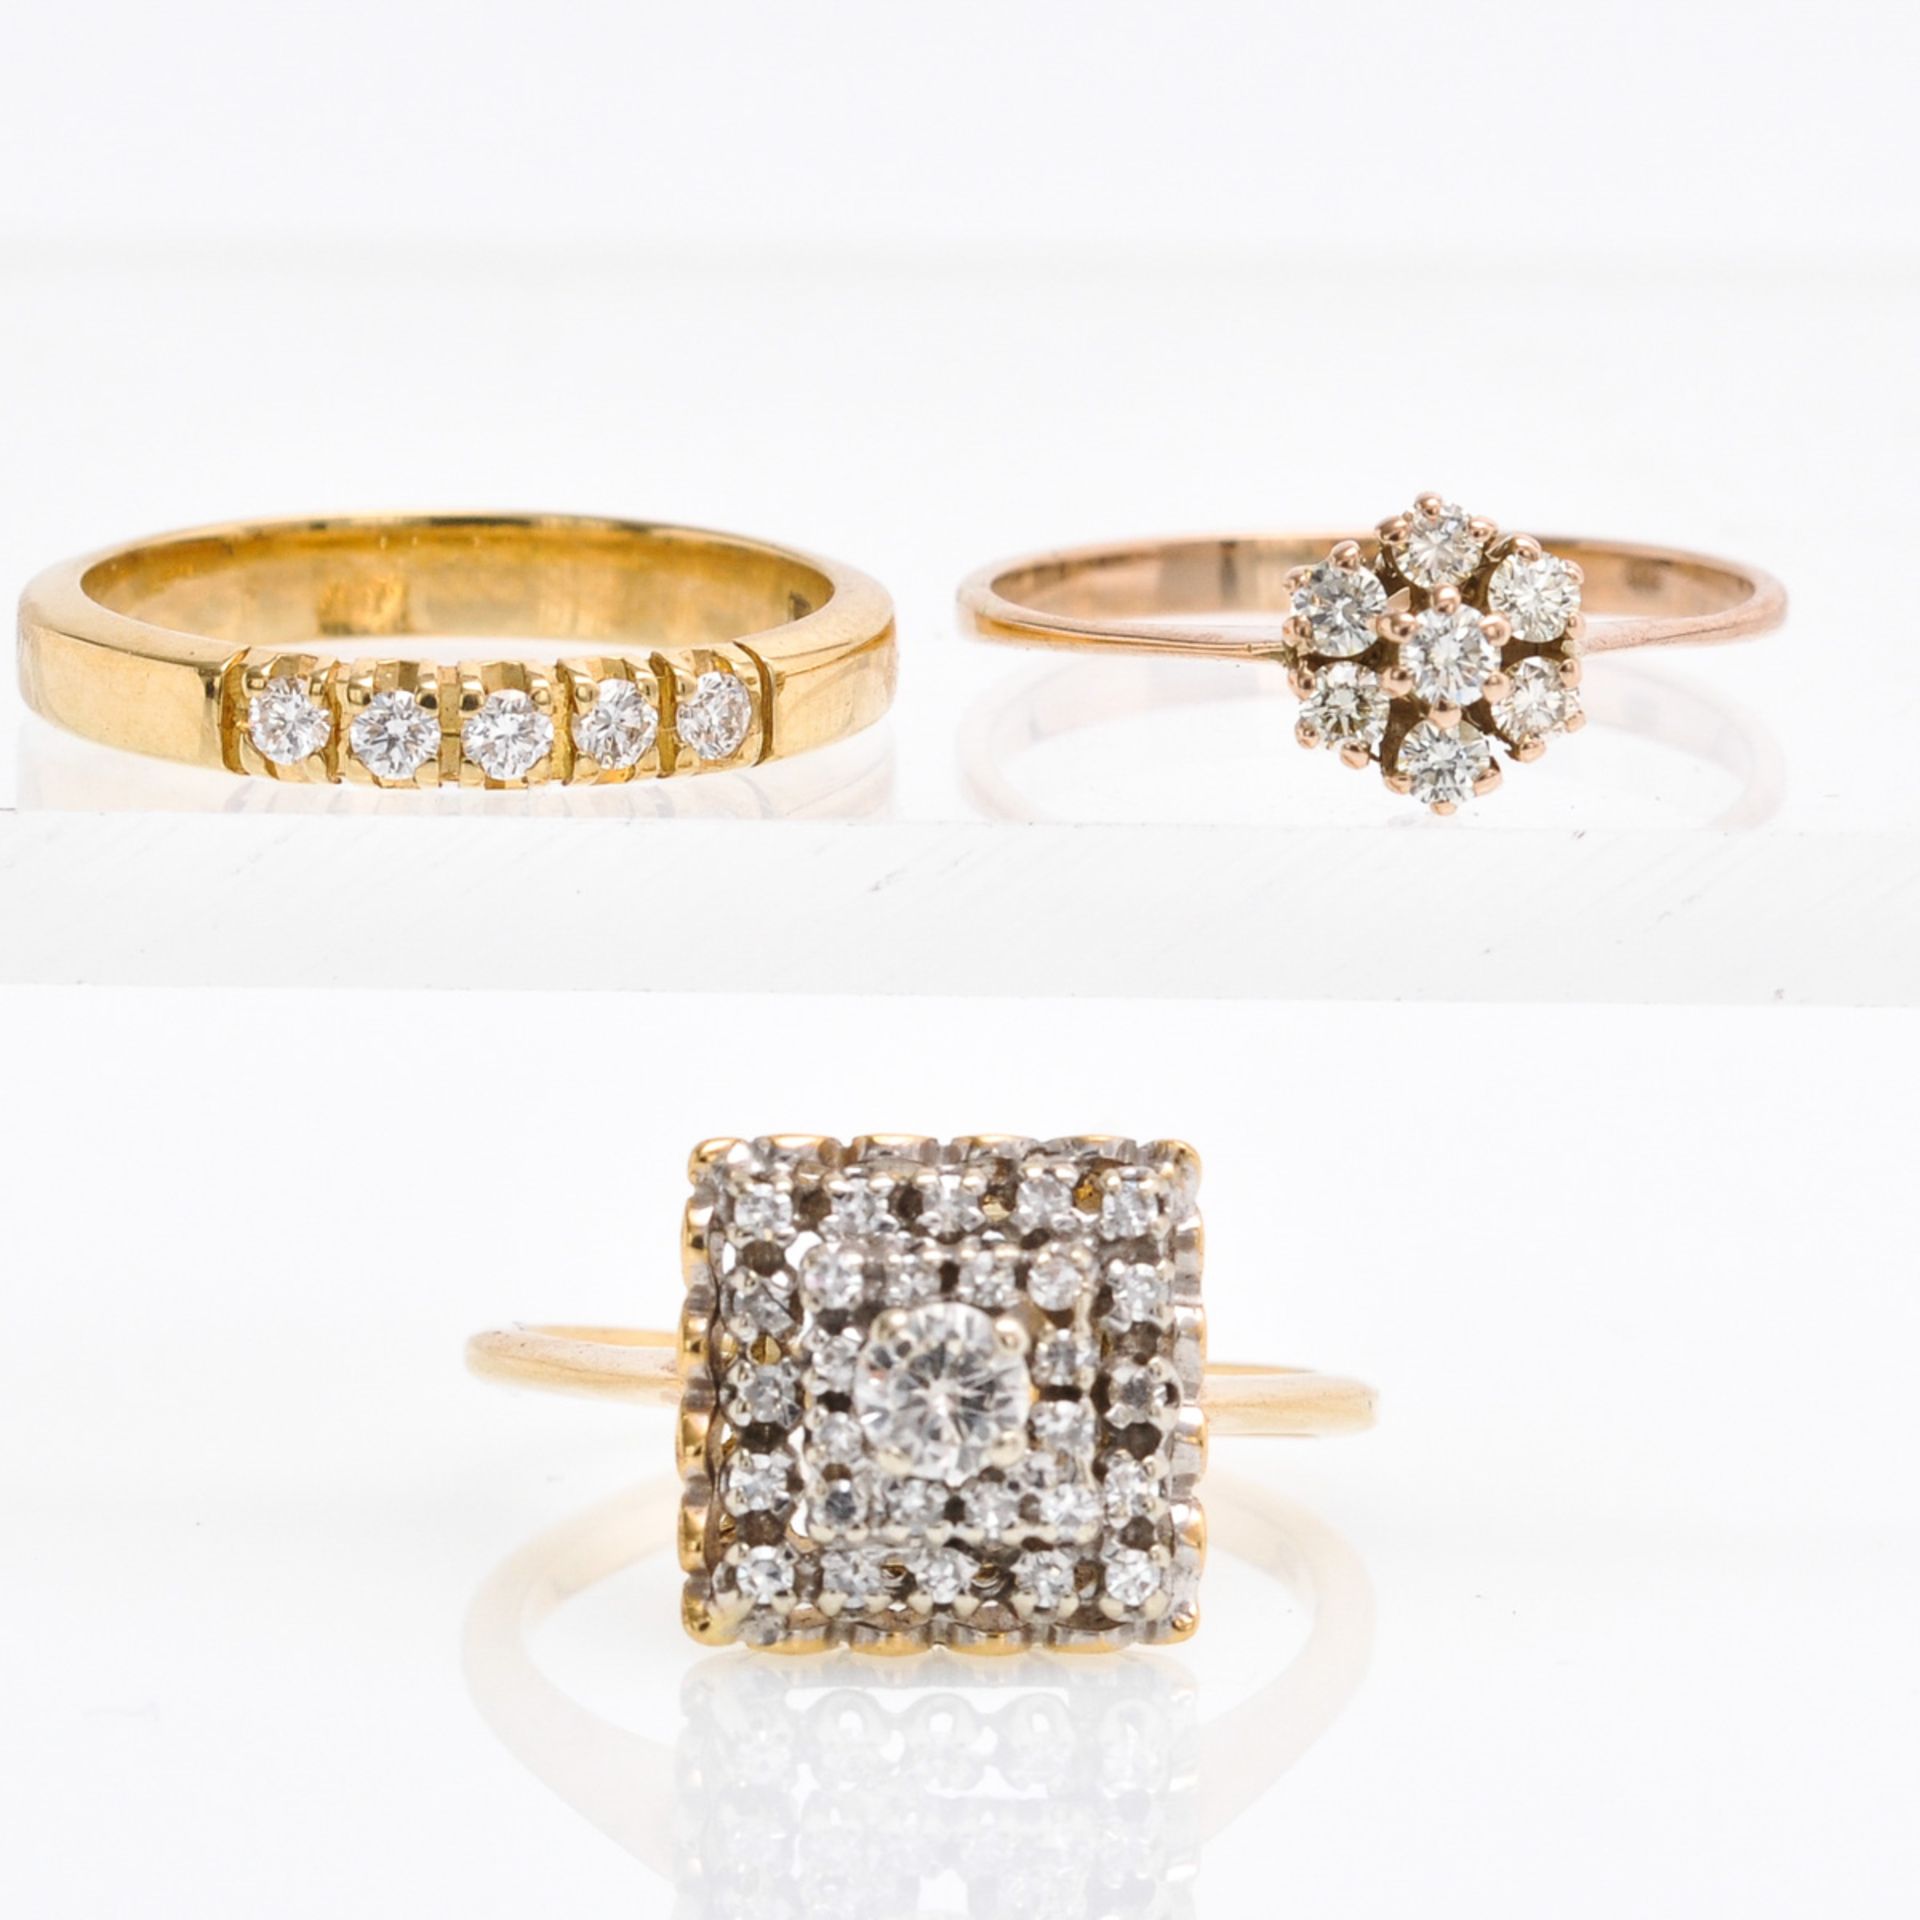 Three Ladies Diamond Rings